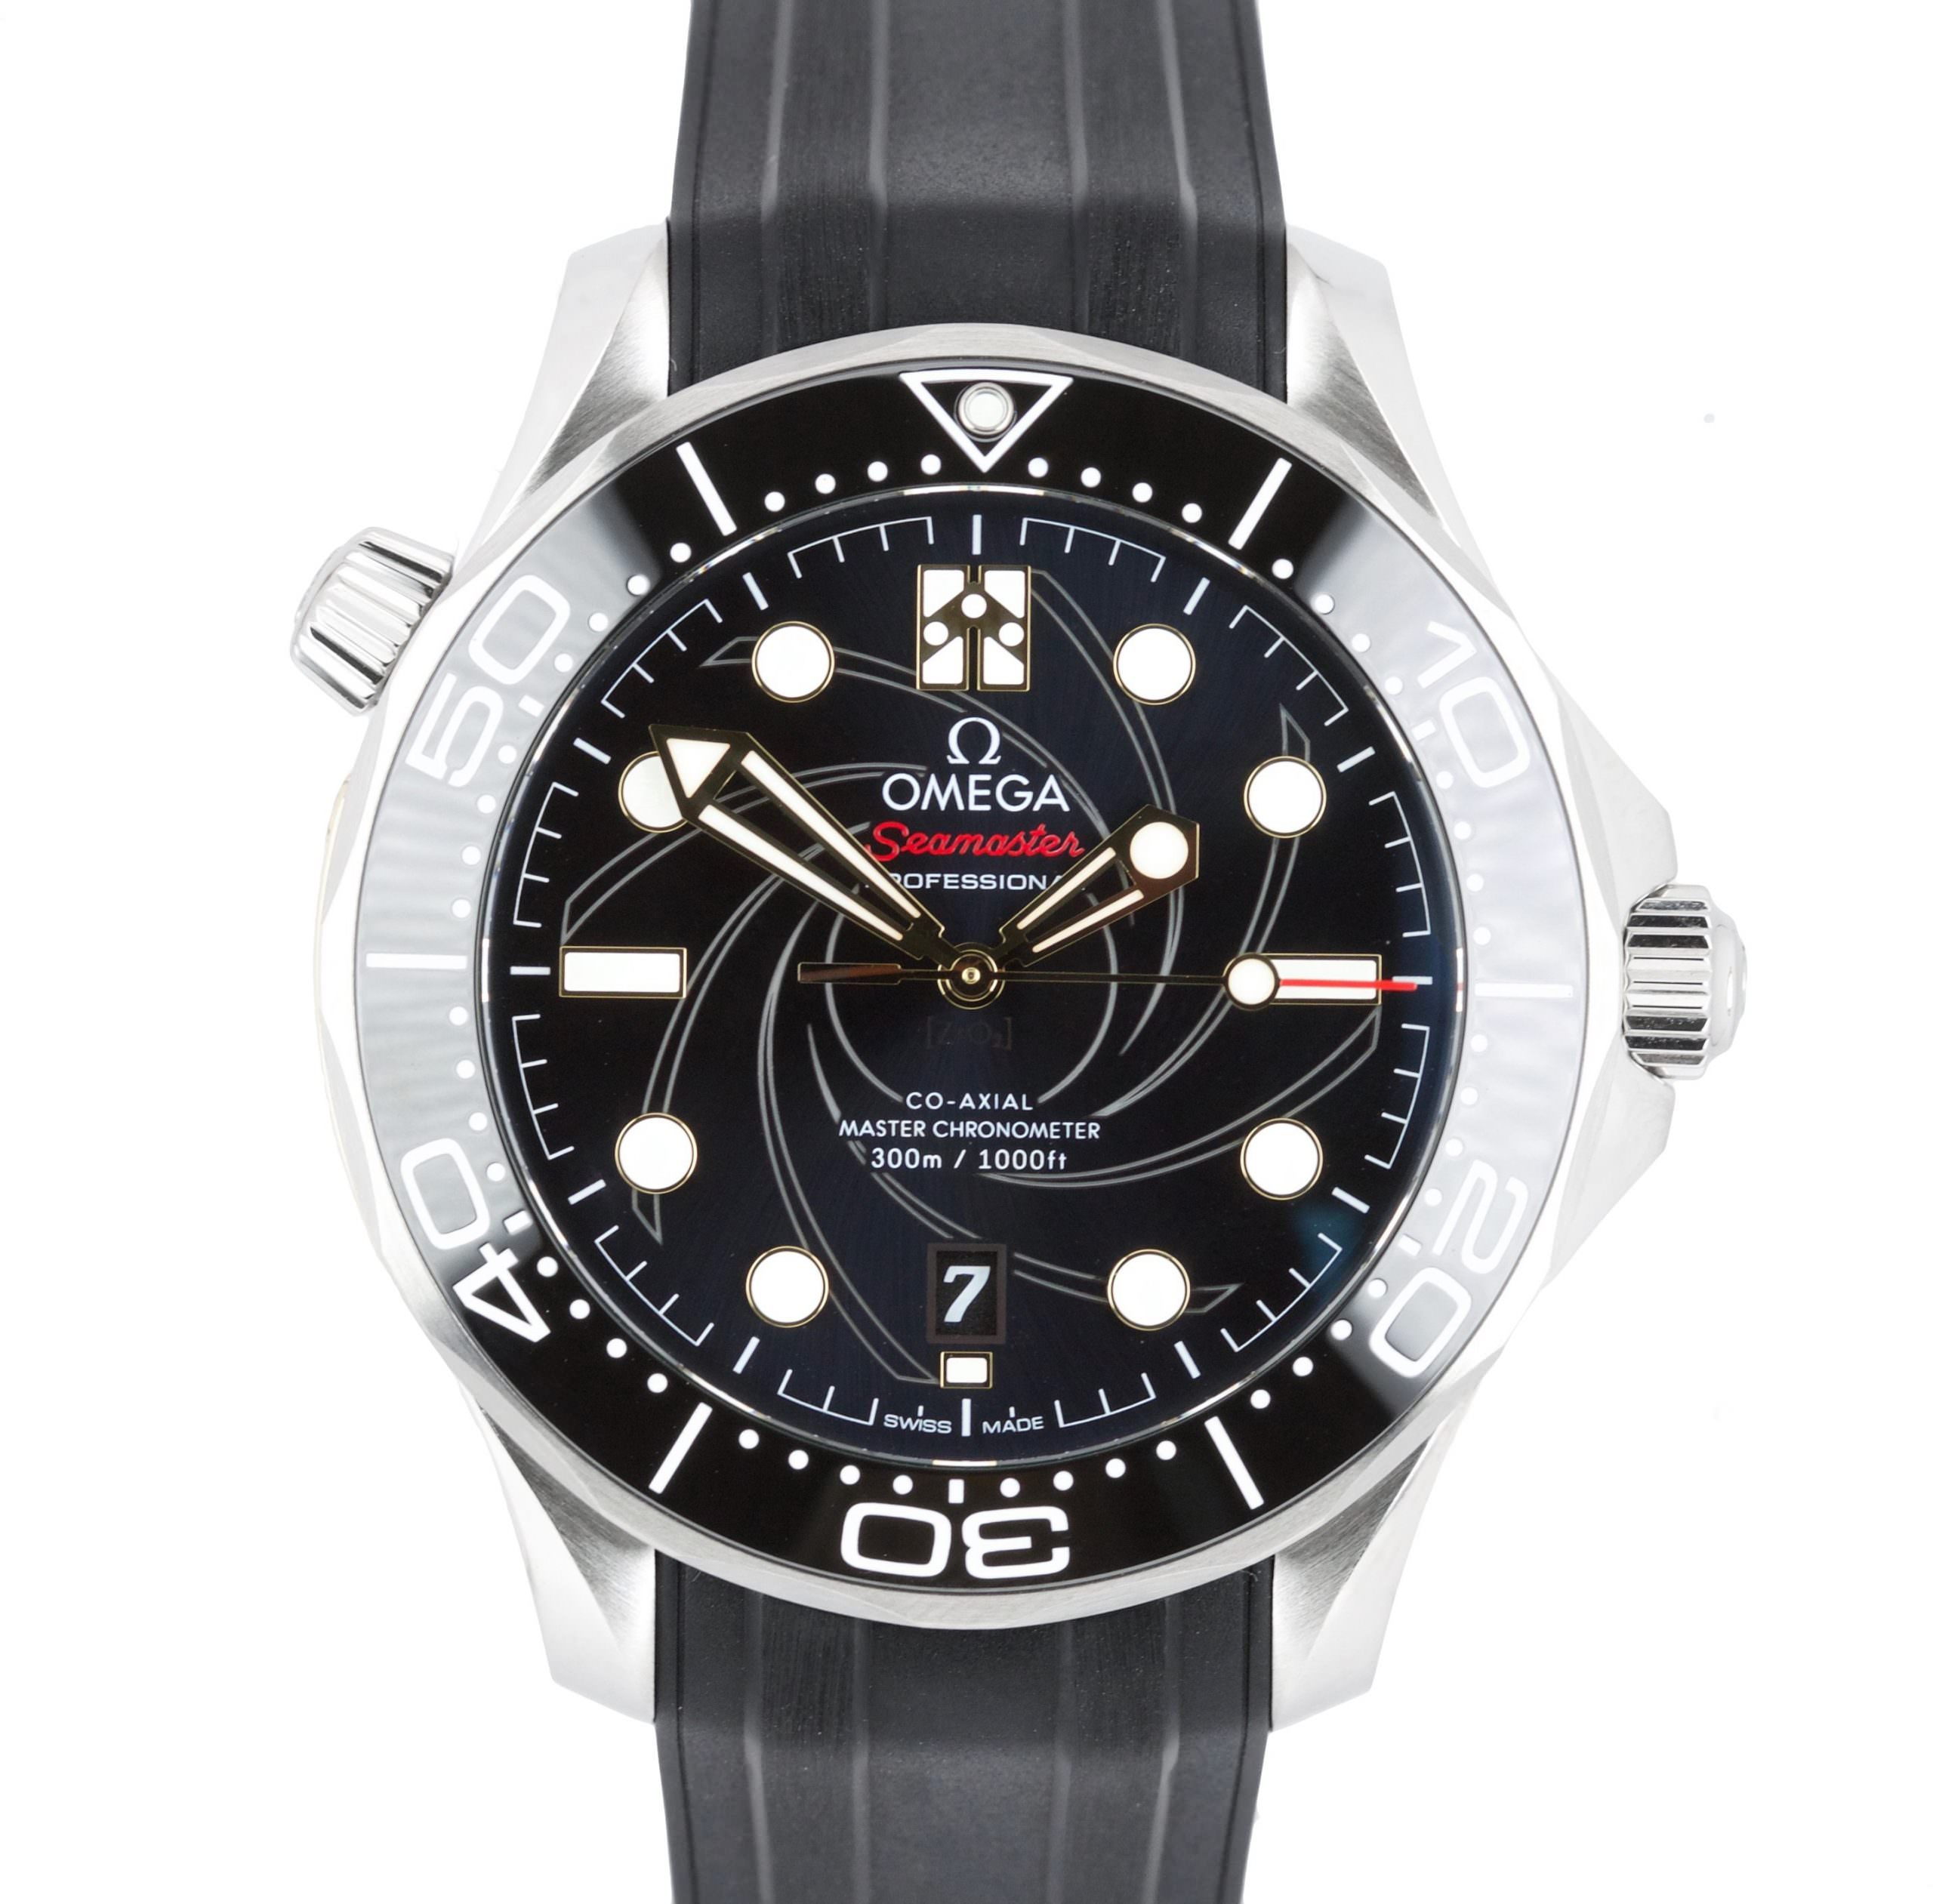 Omega Seamaster 300M 007 James Bond Ltd Edition Edinburgh Watch Company